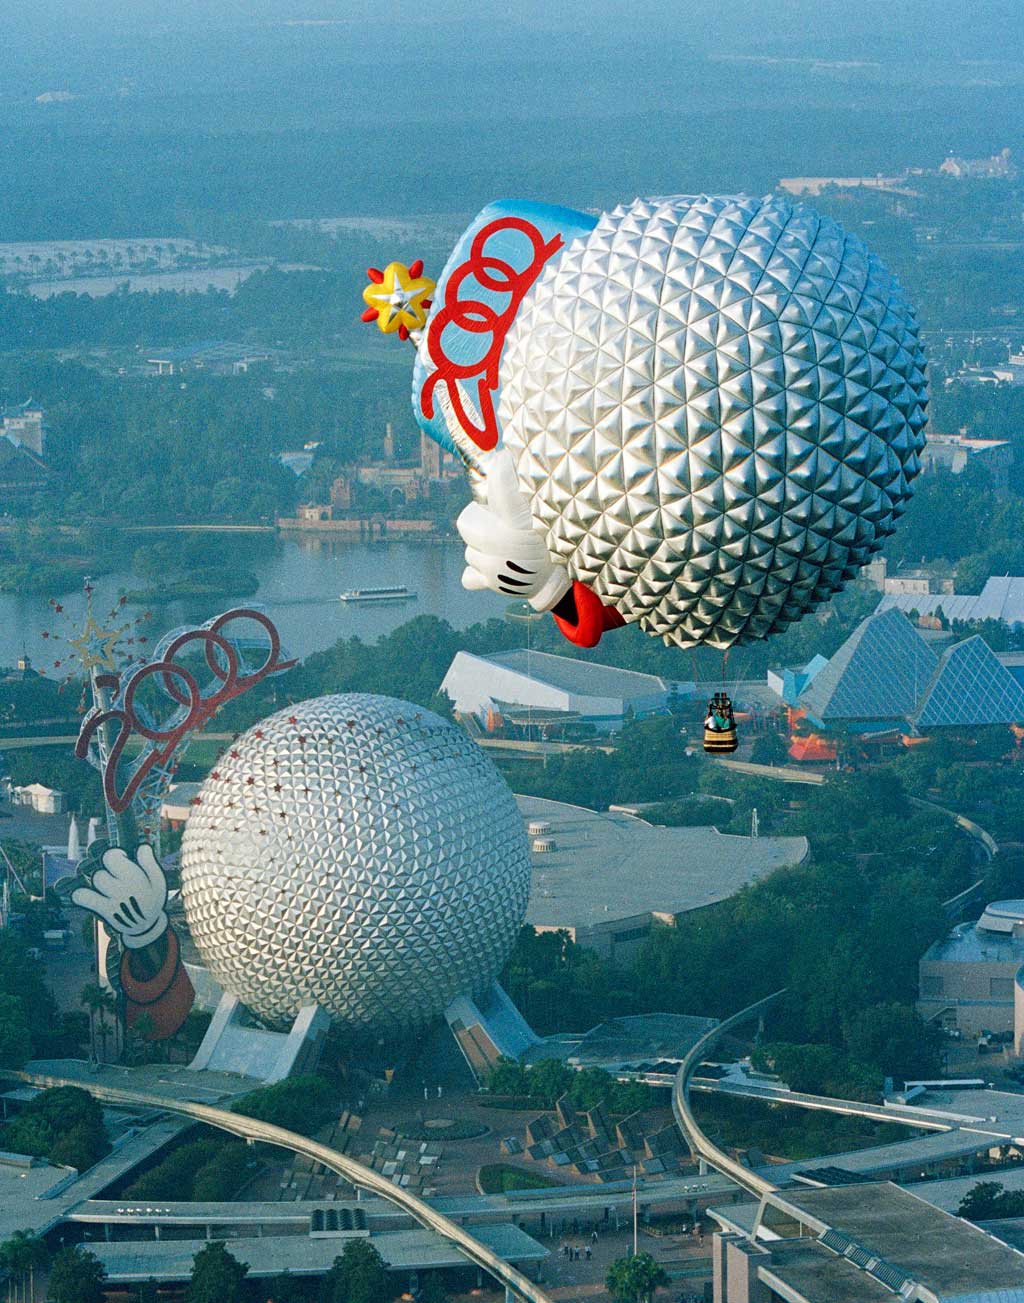 A celebratory hot air balloon shaped like Spaceship Earth flies over EPCOT in 2000 at Walt Disney World Resort in Lake Buena Vista, Fla. (Alain Boniec, Photographer)